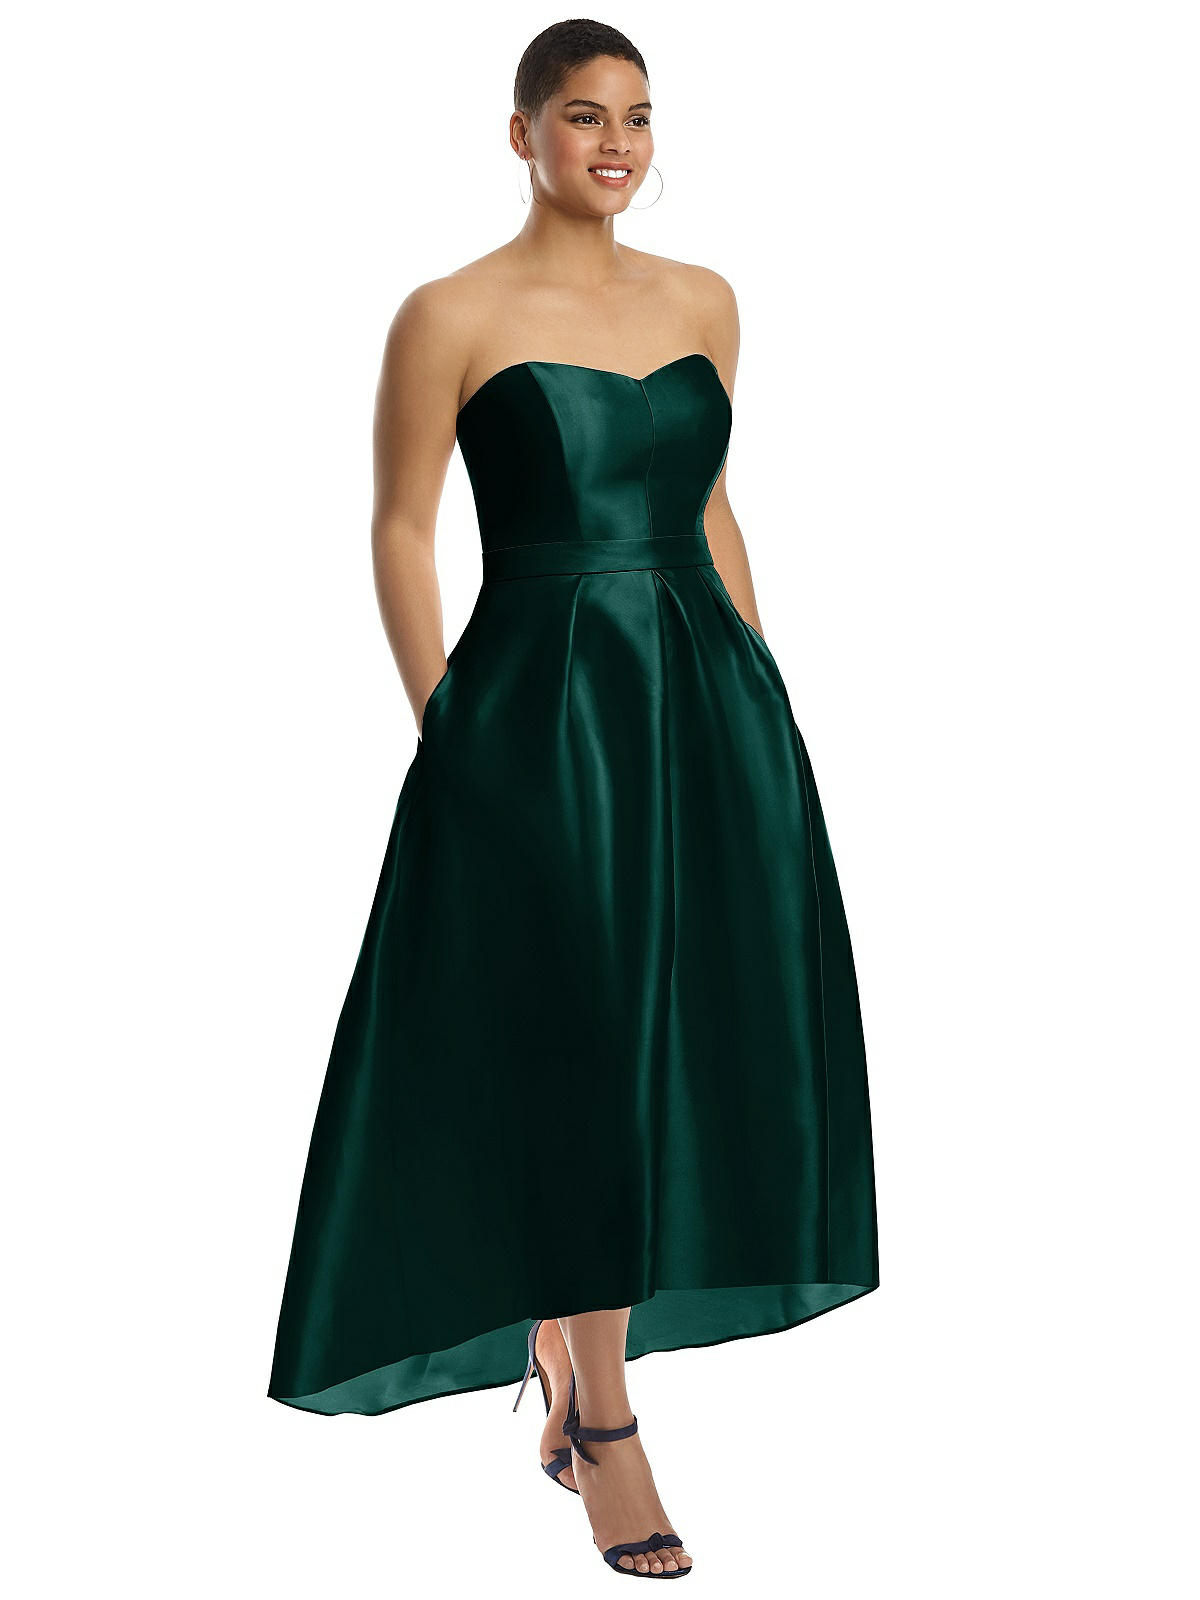 Green Floral Dress  Jacquard HighLow Dress  Strapless Gown  Lulus